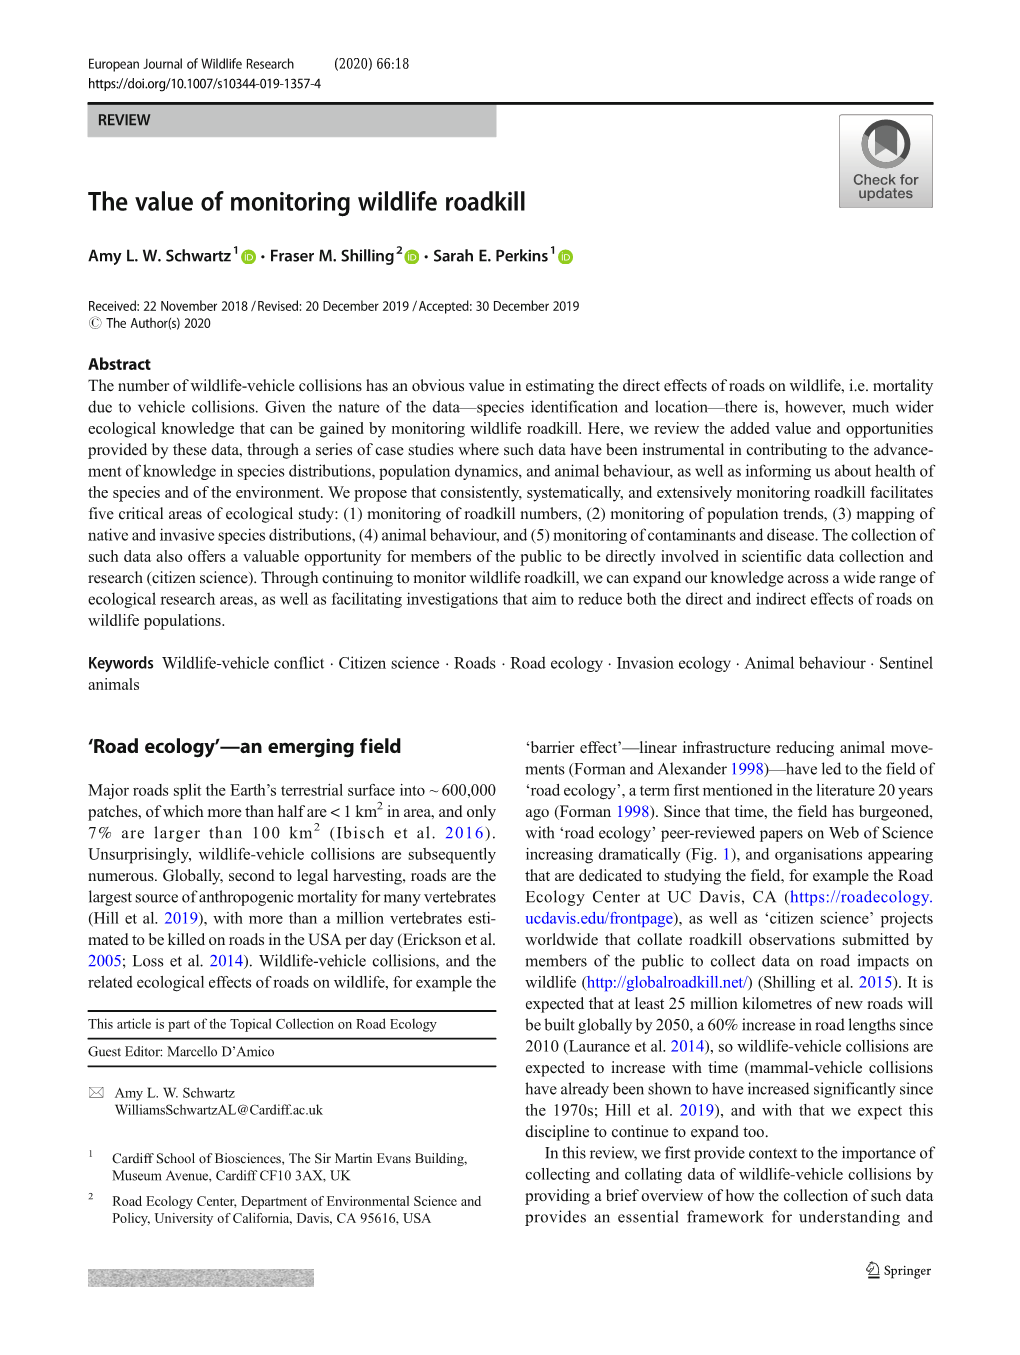 The Value of Monitoring Wildlife Roadkill